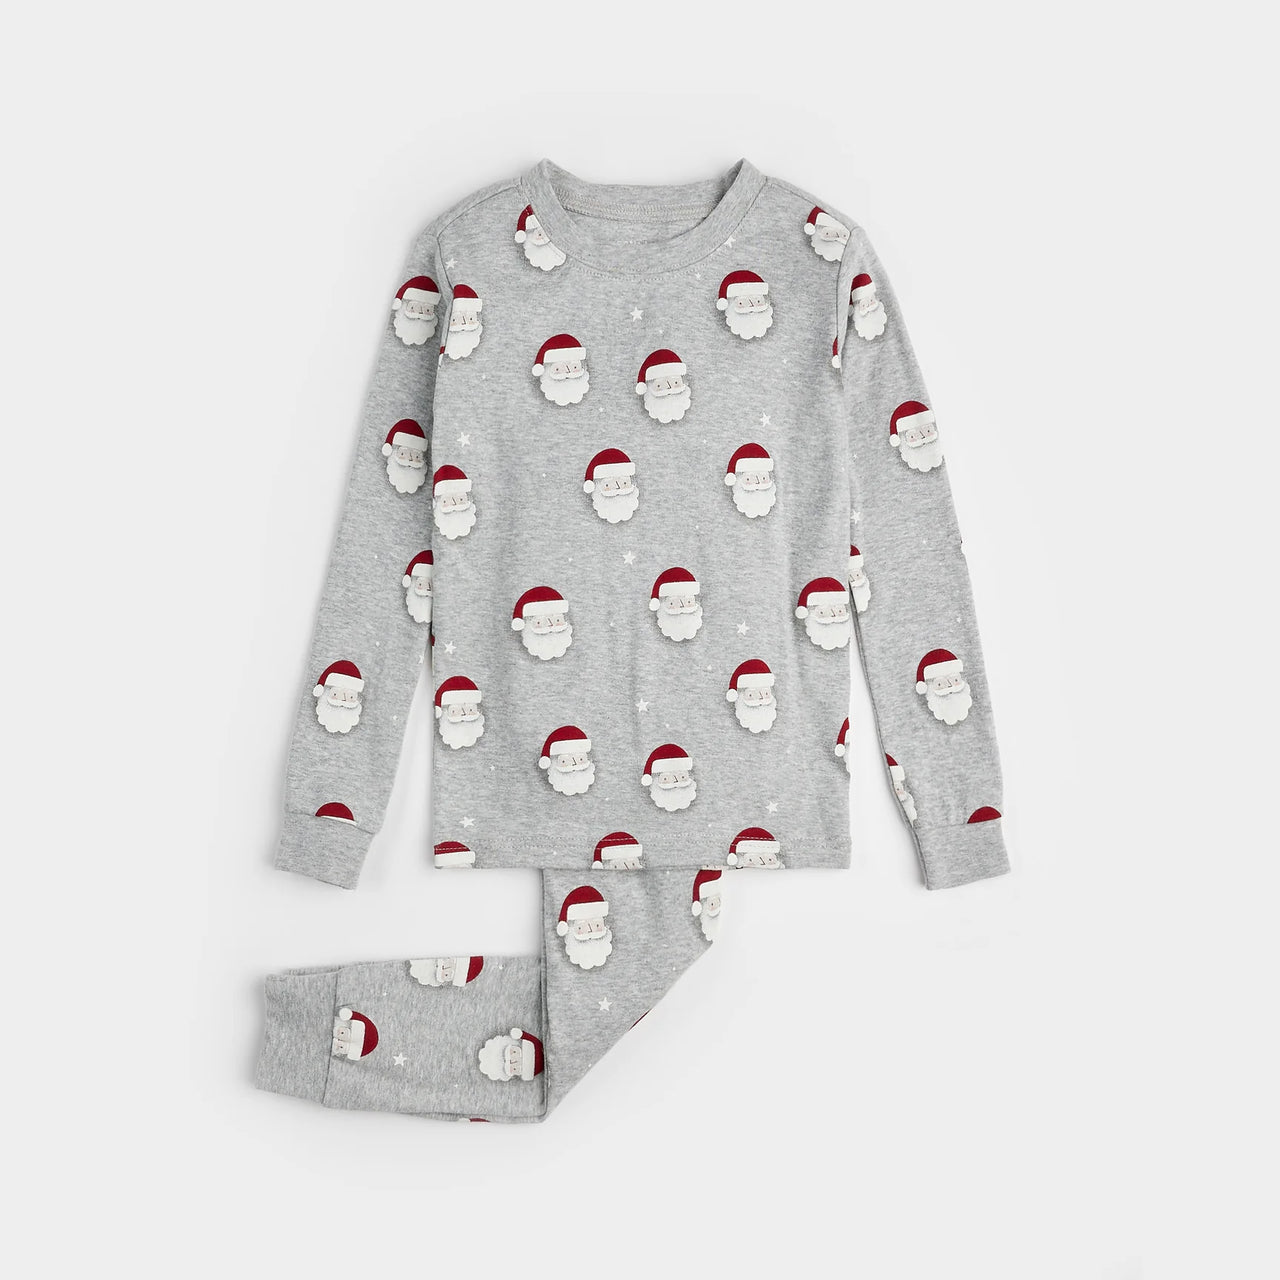 Santa Print on Heather Grey PJ Set